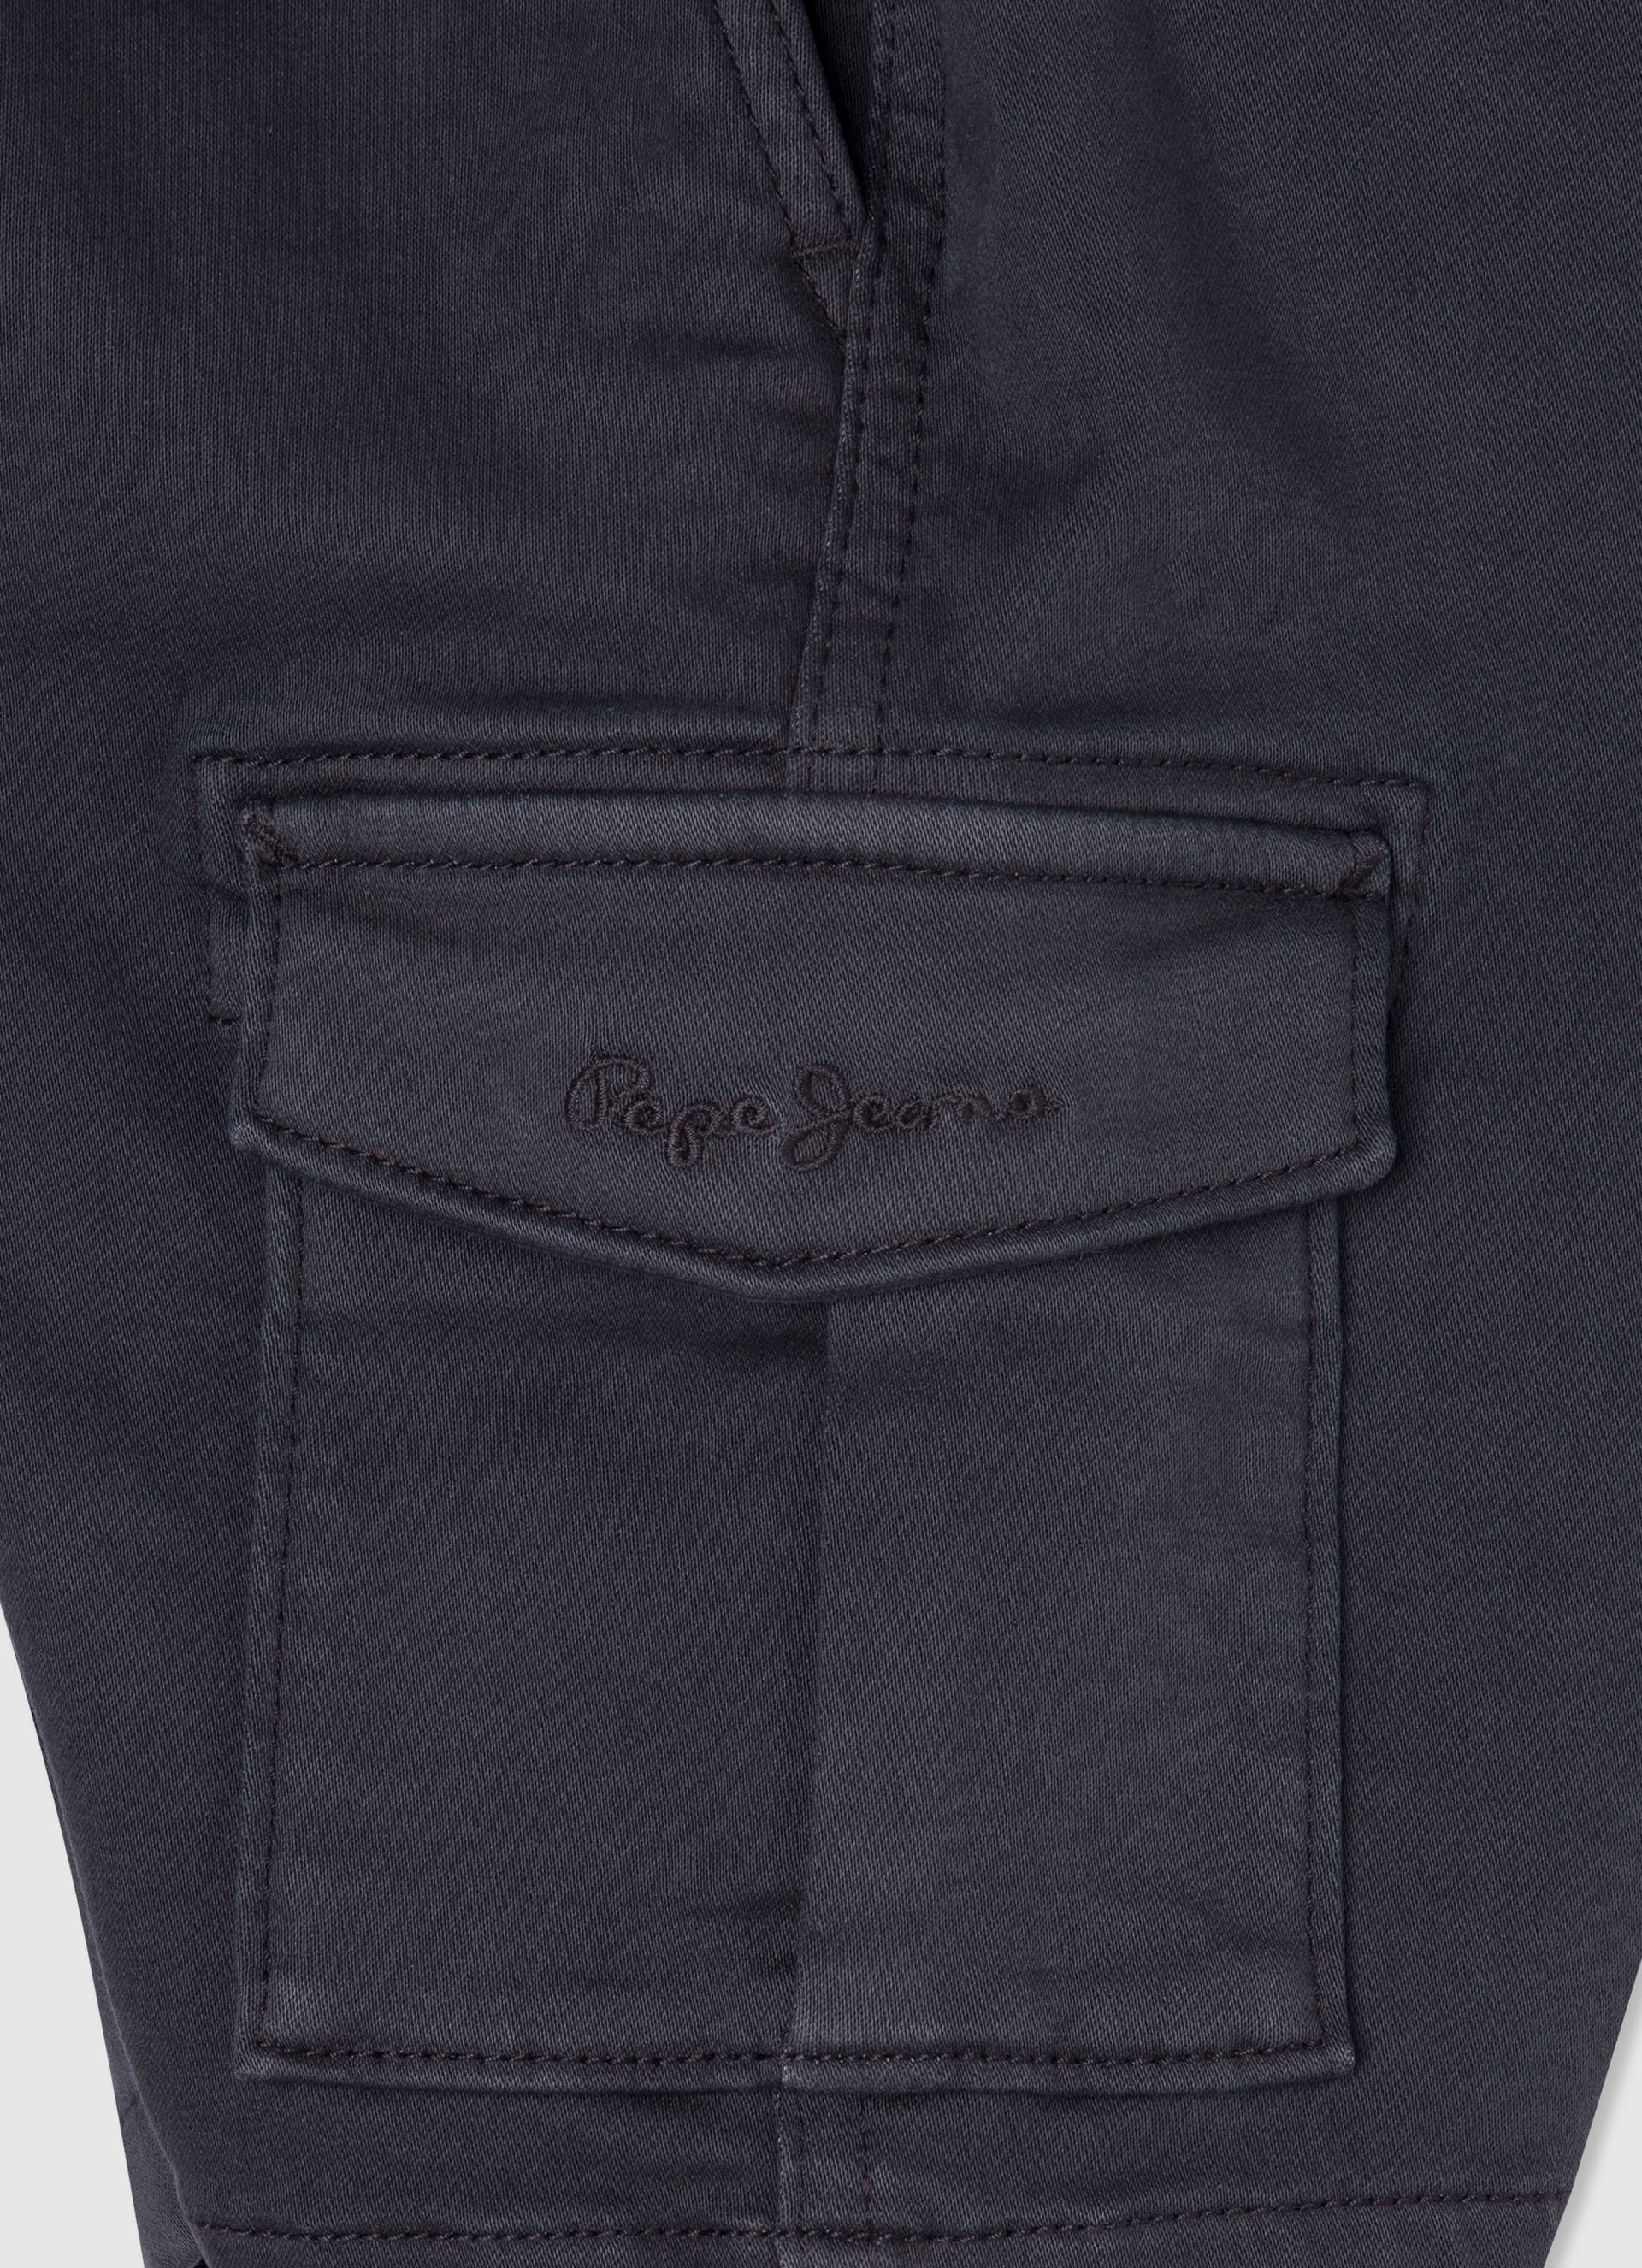 Pepe Jeans Cargoshorts, mit Ton-in-Ton Logoschriftzug